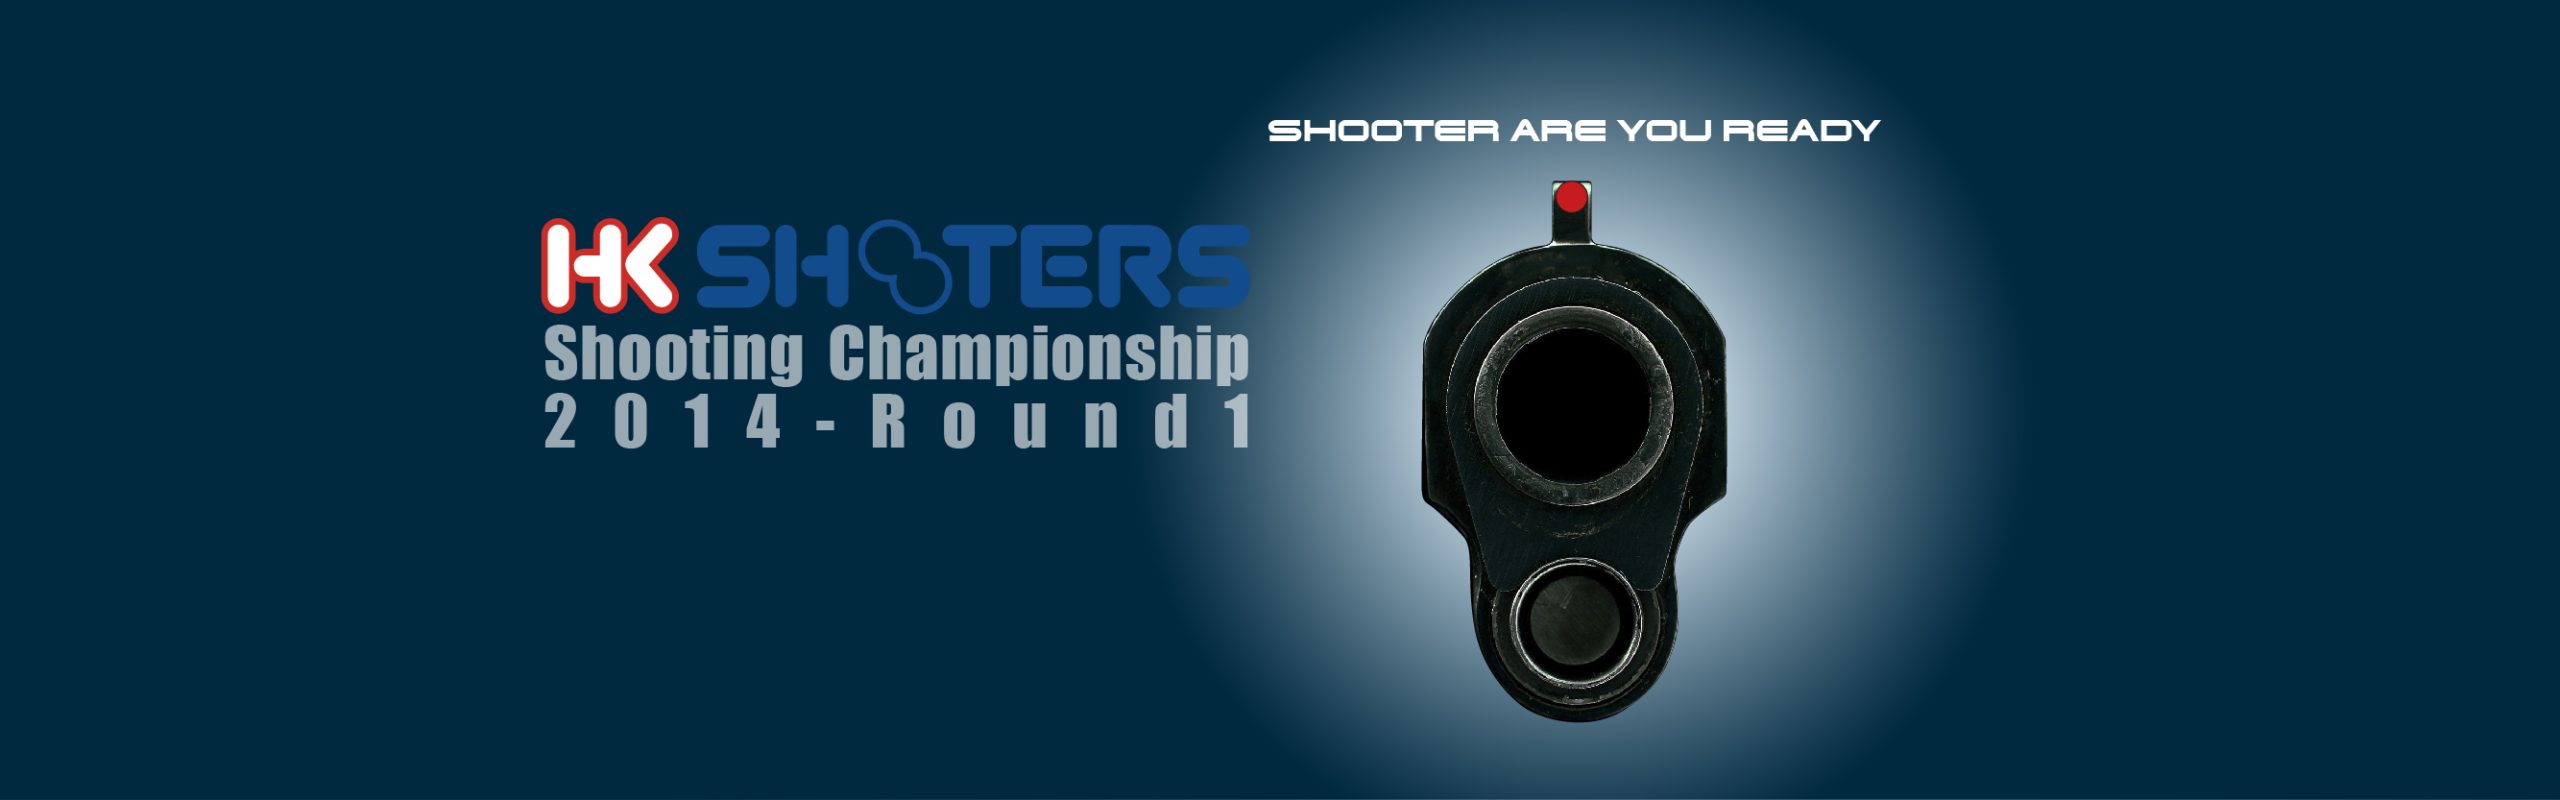 HKSHOOTERS Shooting Championship 2014 Round 1-COF